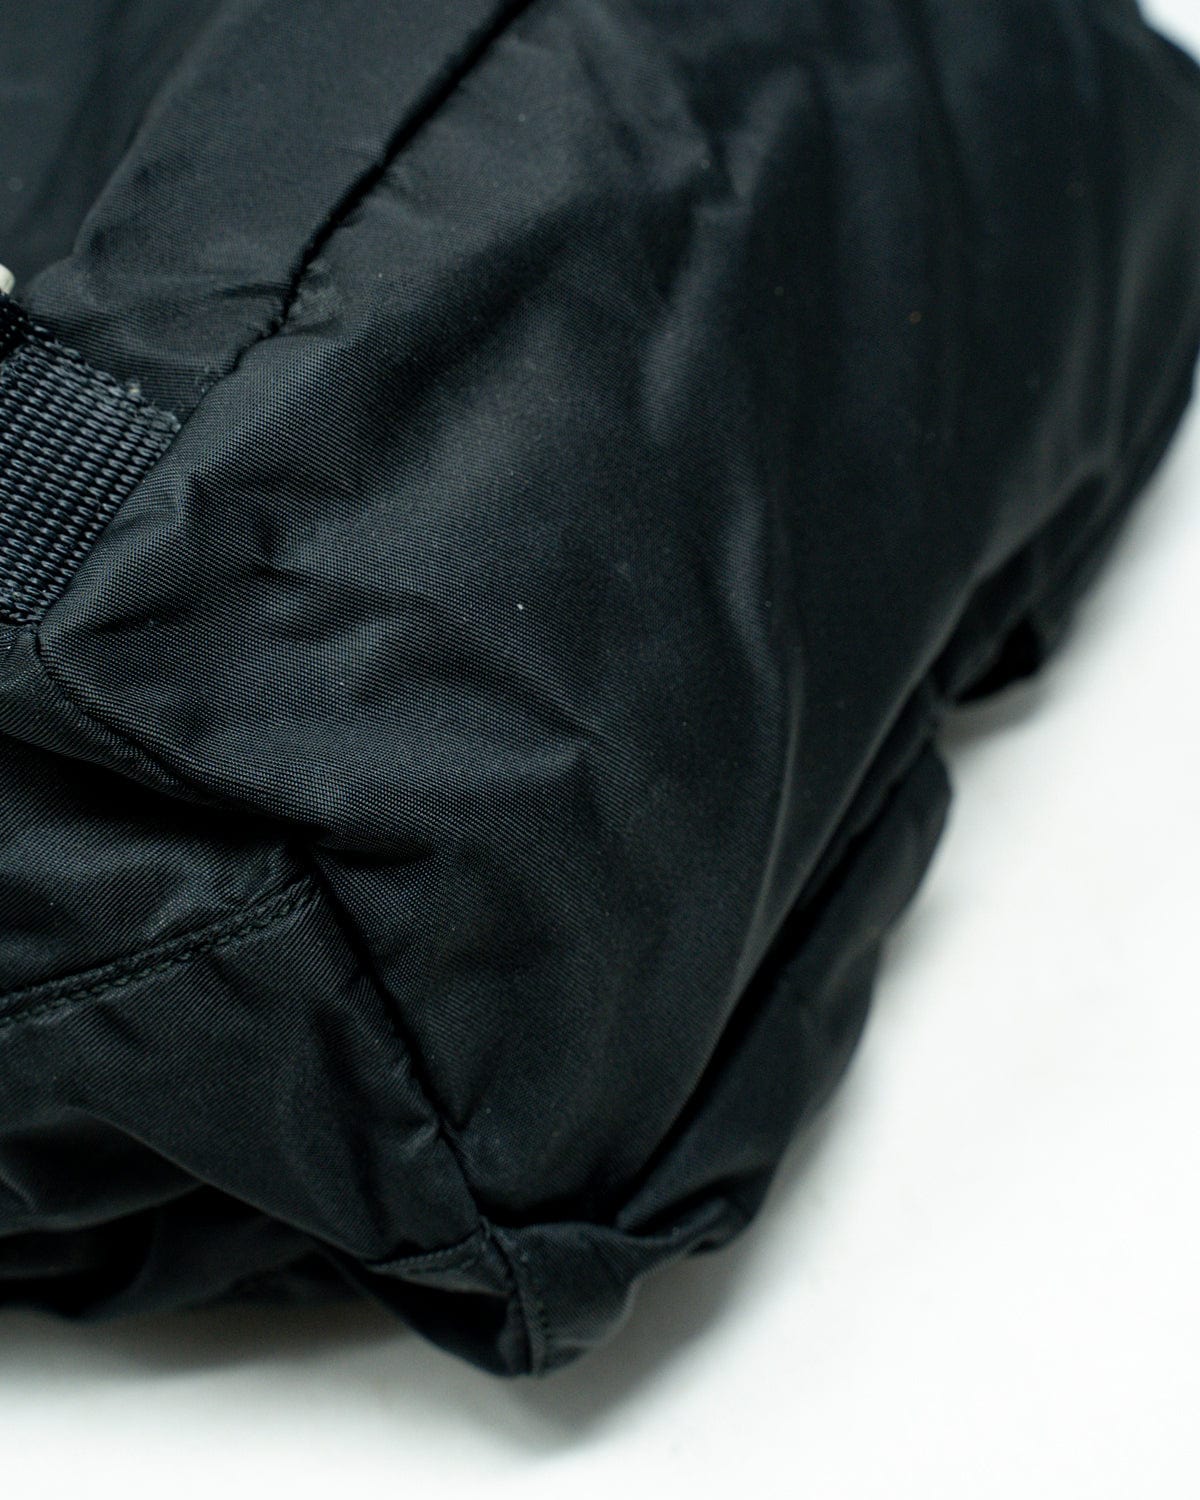 Prada PRADA Vintage Small Nylon Backpack with Two Front Pockets - AWL3192